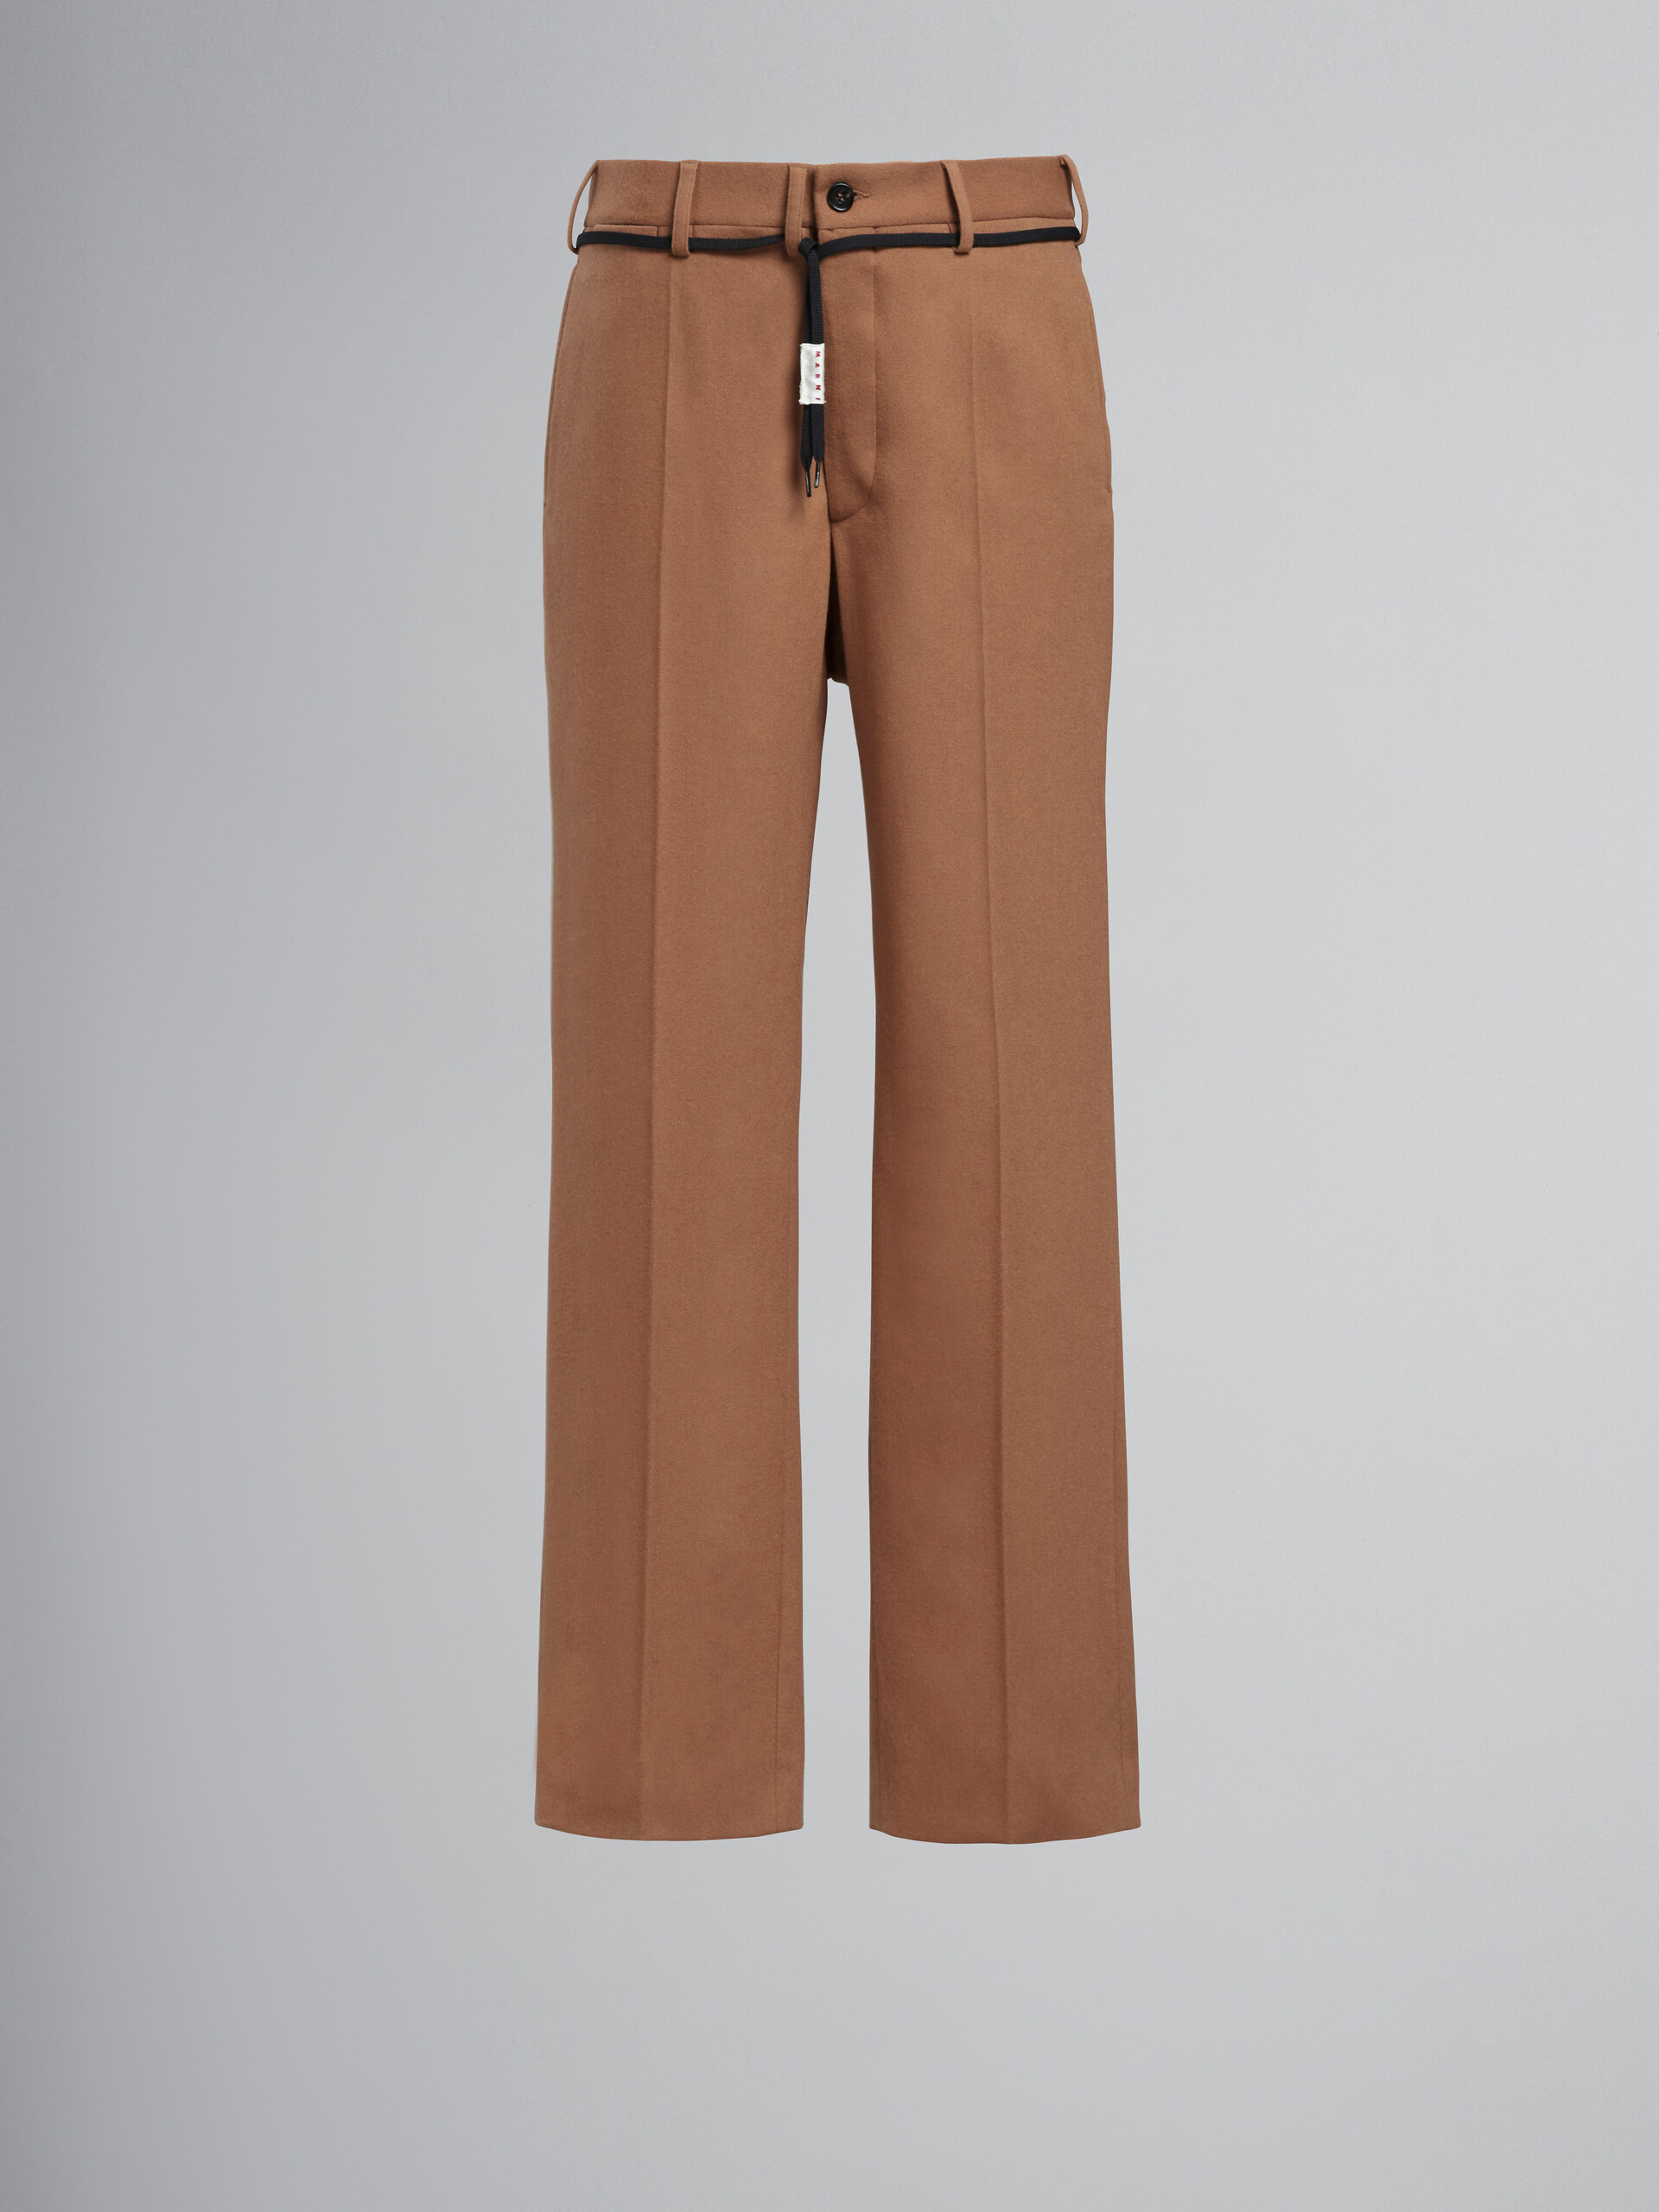 Brown wool chino pants with drawstring detail - Pants - Image 1